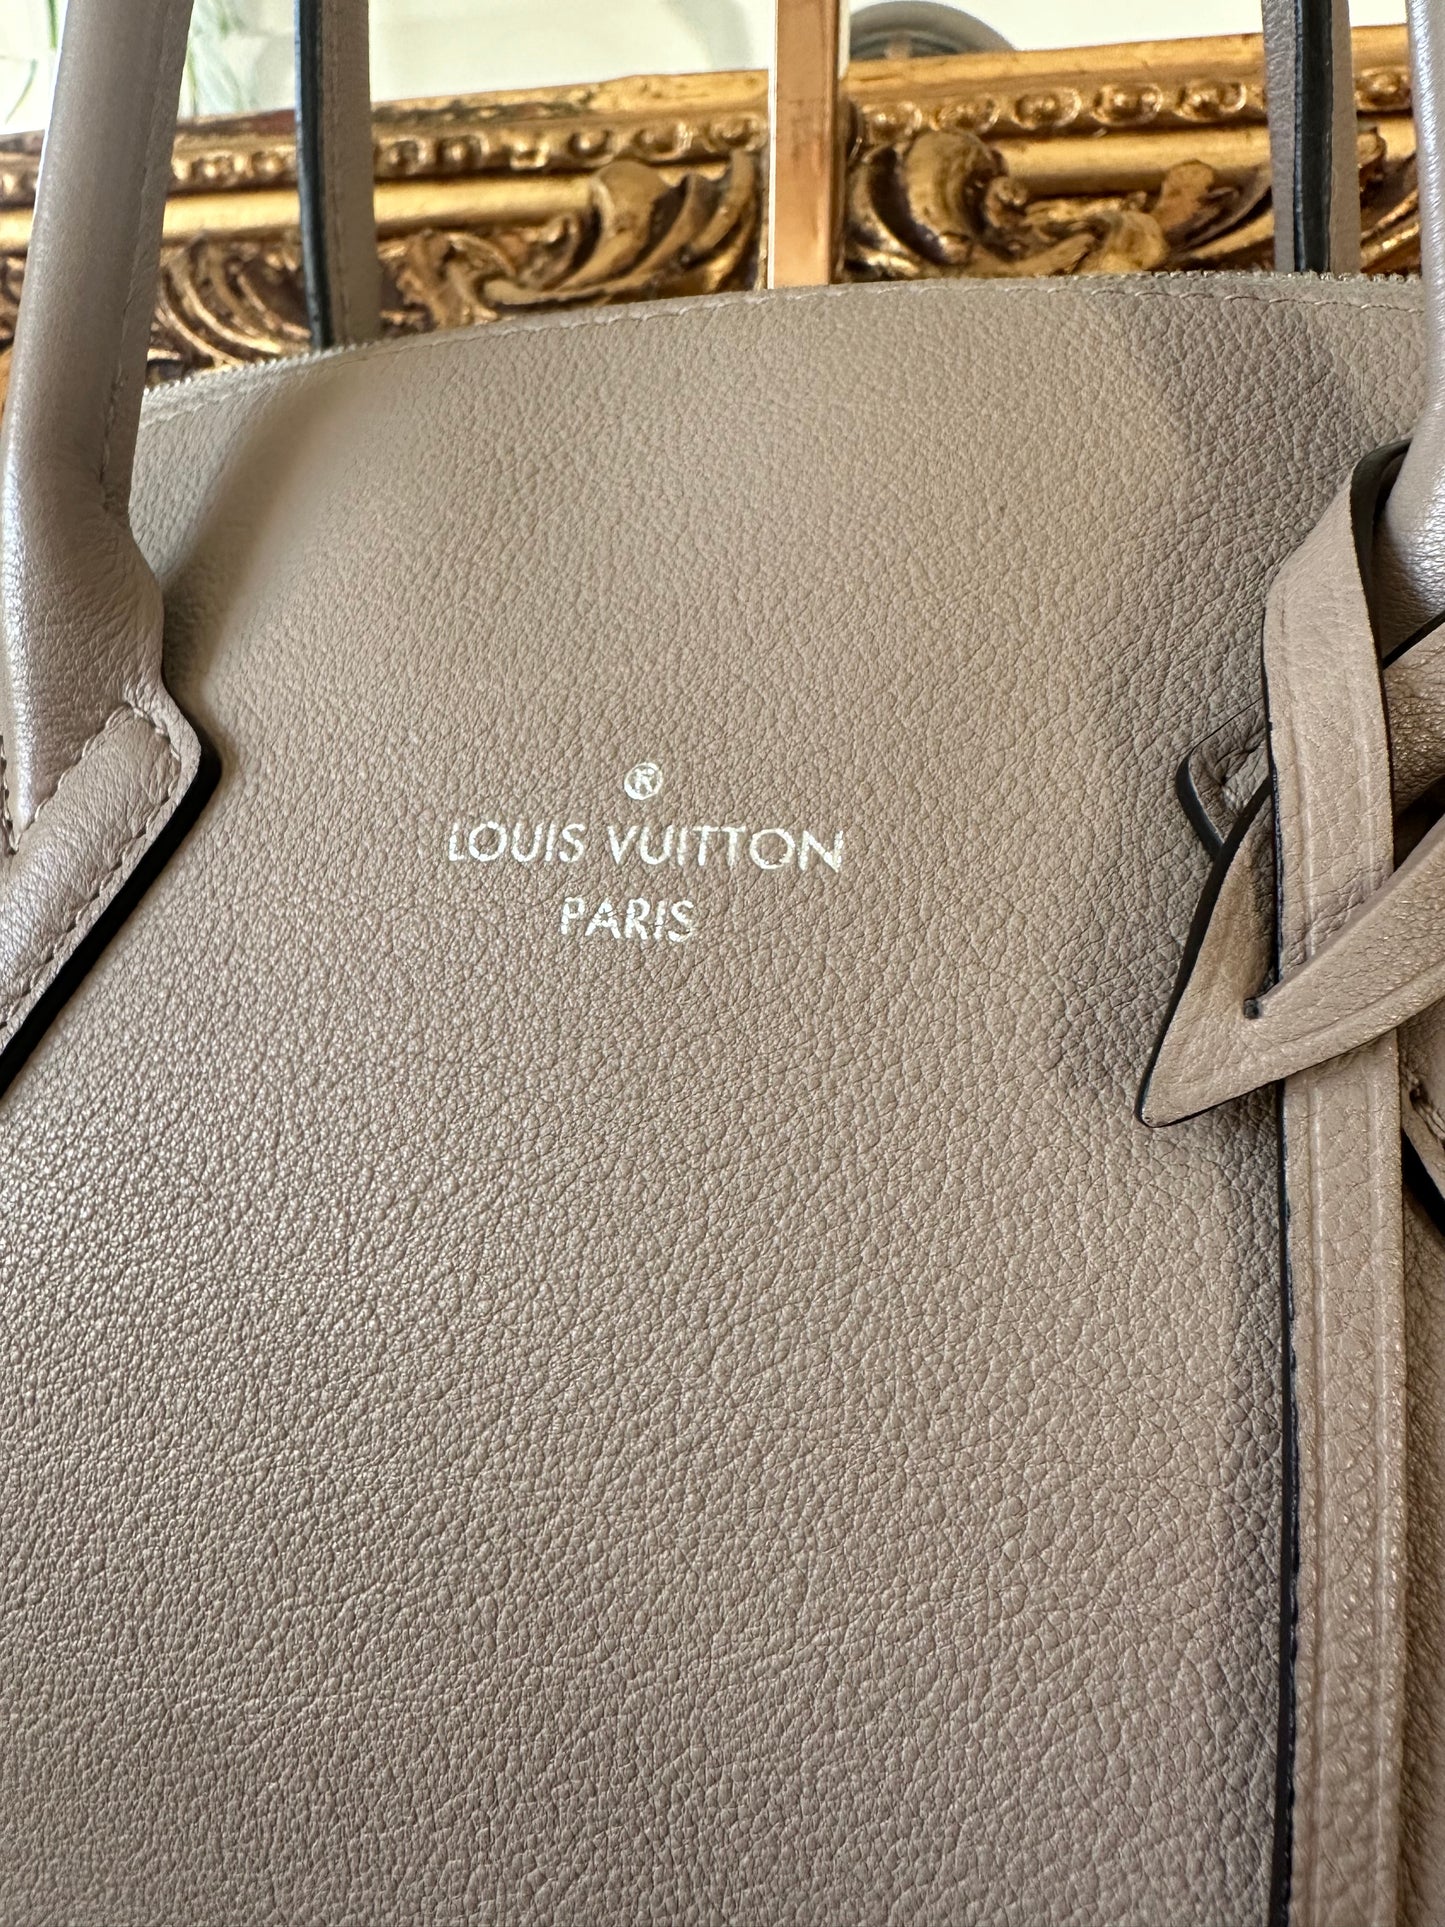 Louis Vuitton soft Lockit tote